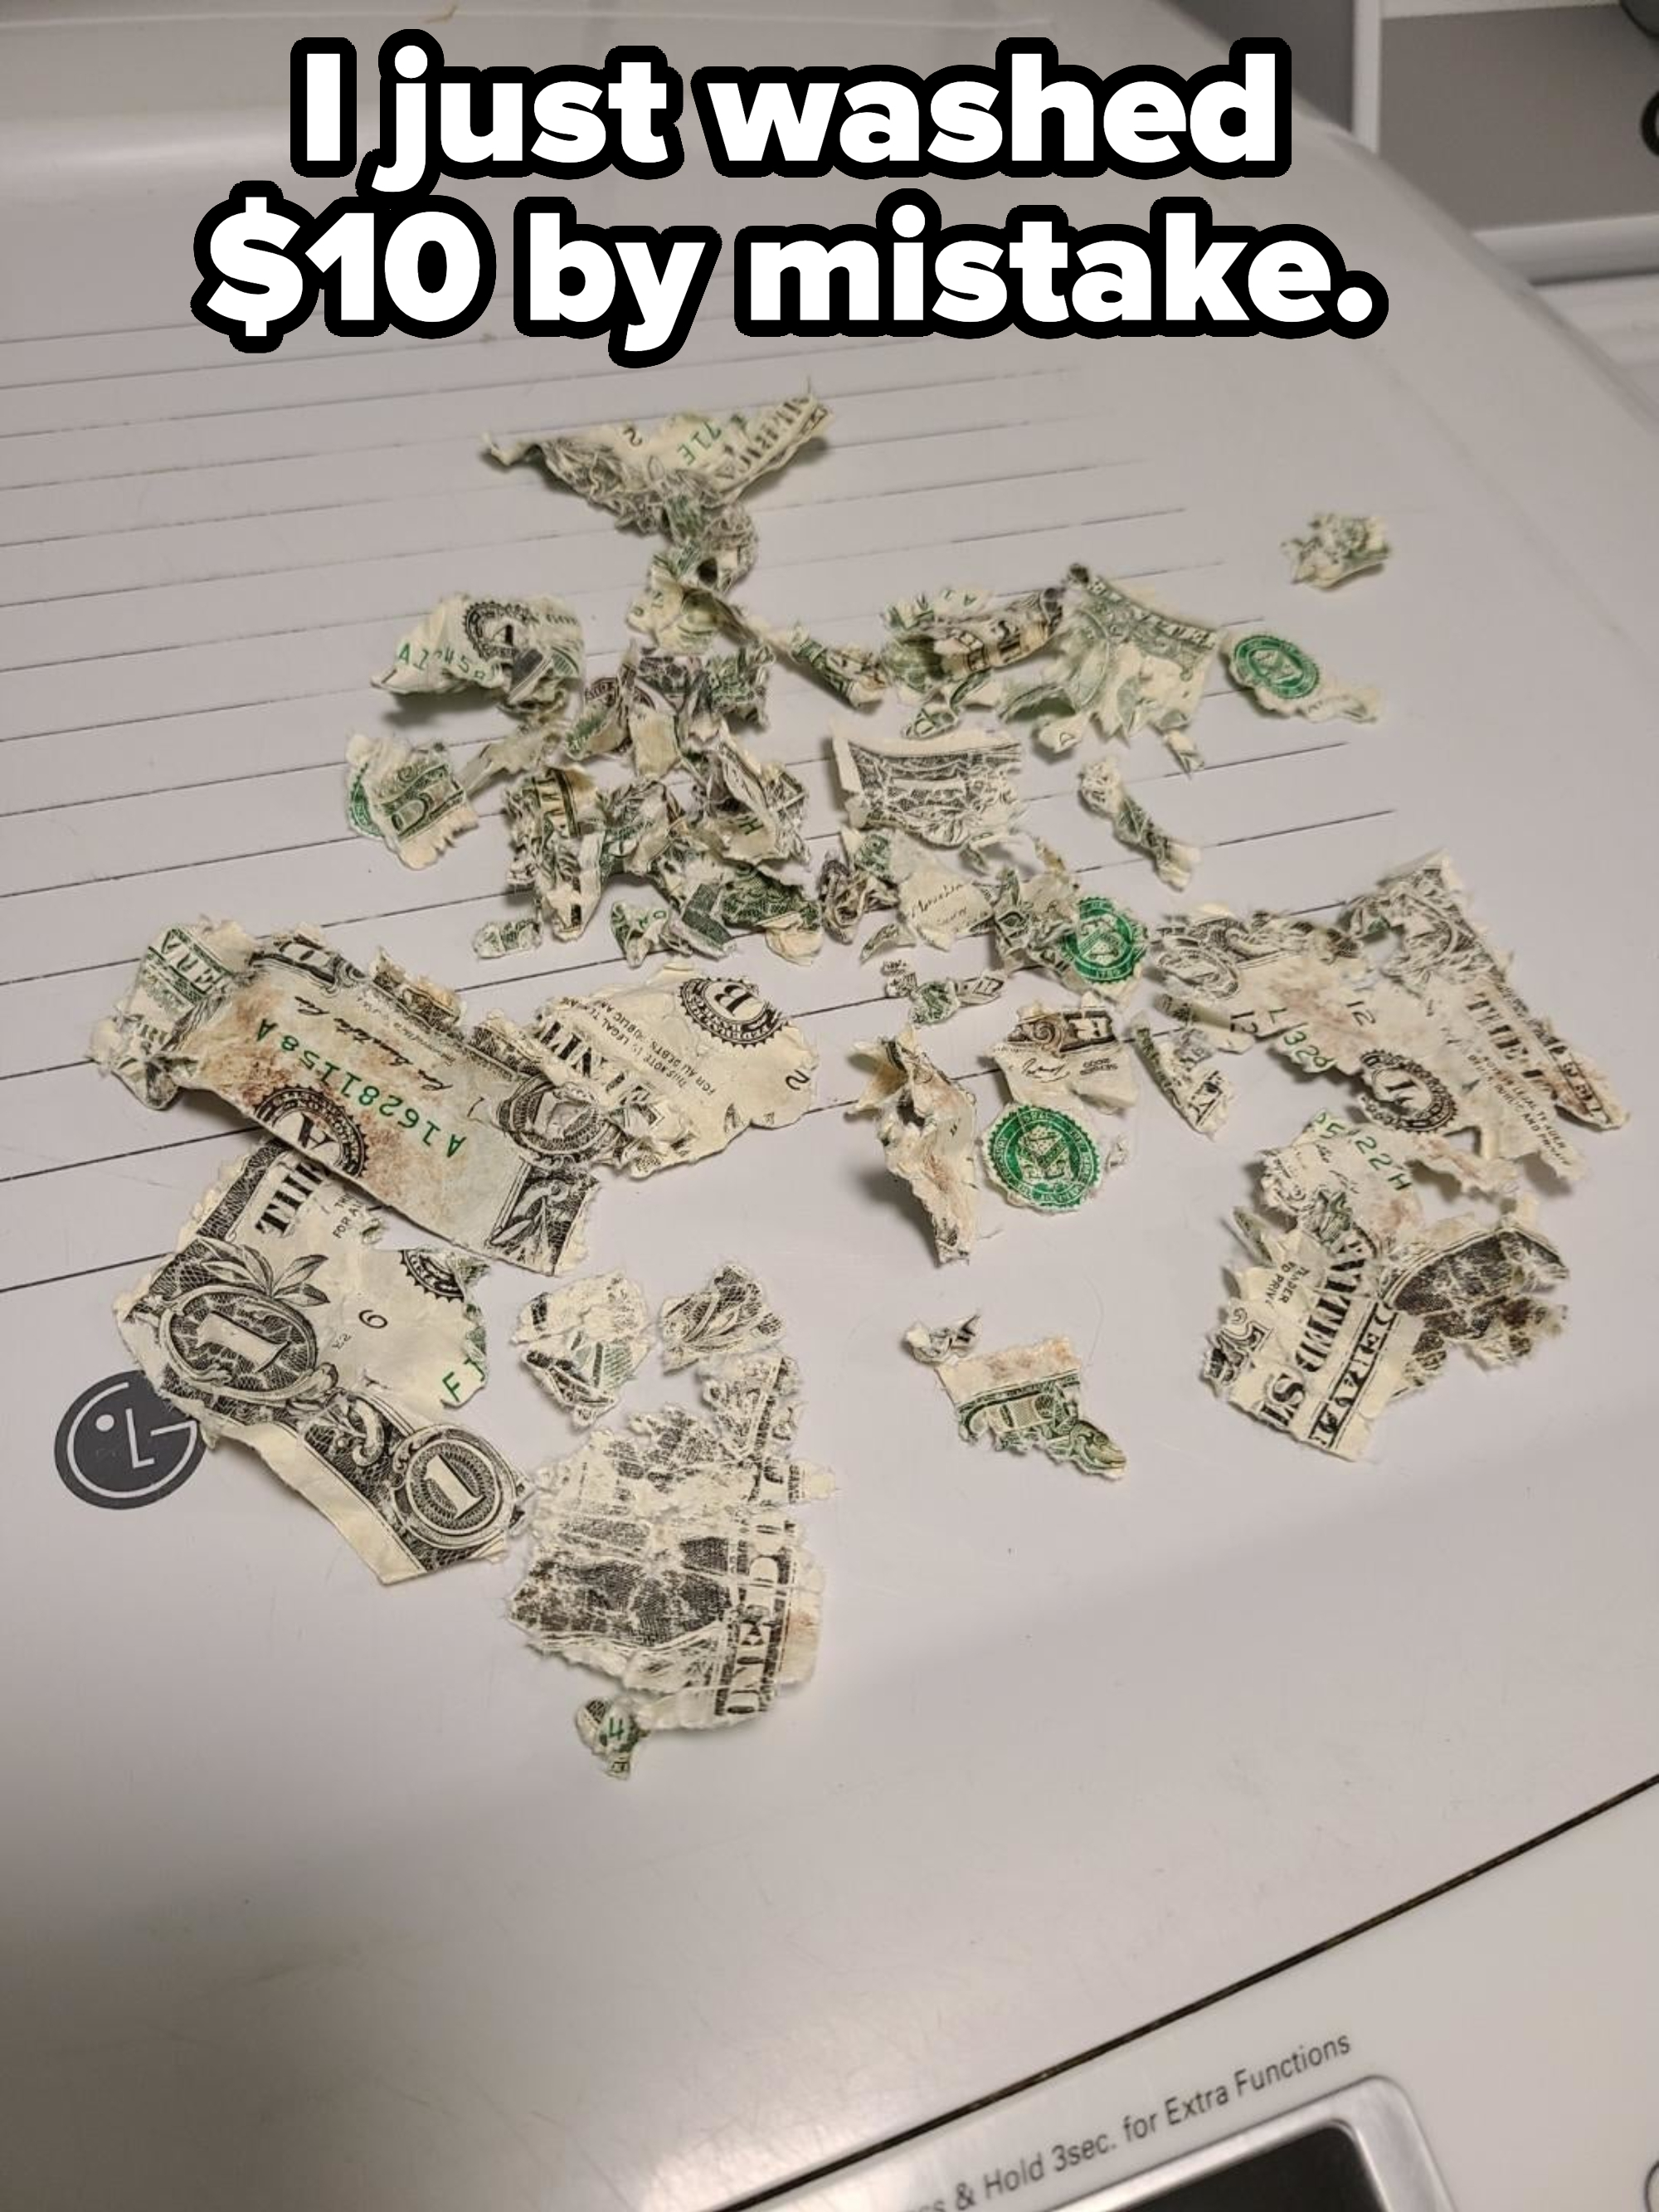 Shredded US dollar bills scattered on a white surface